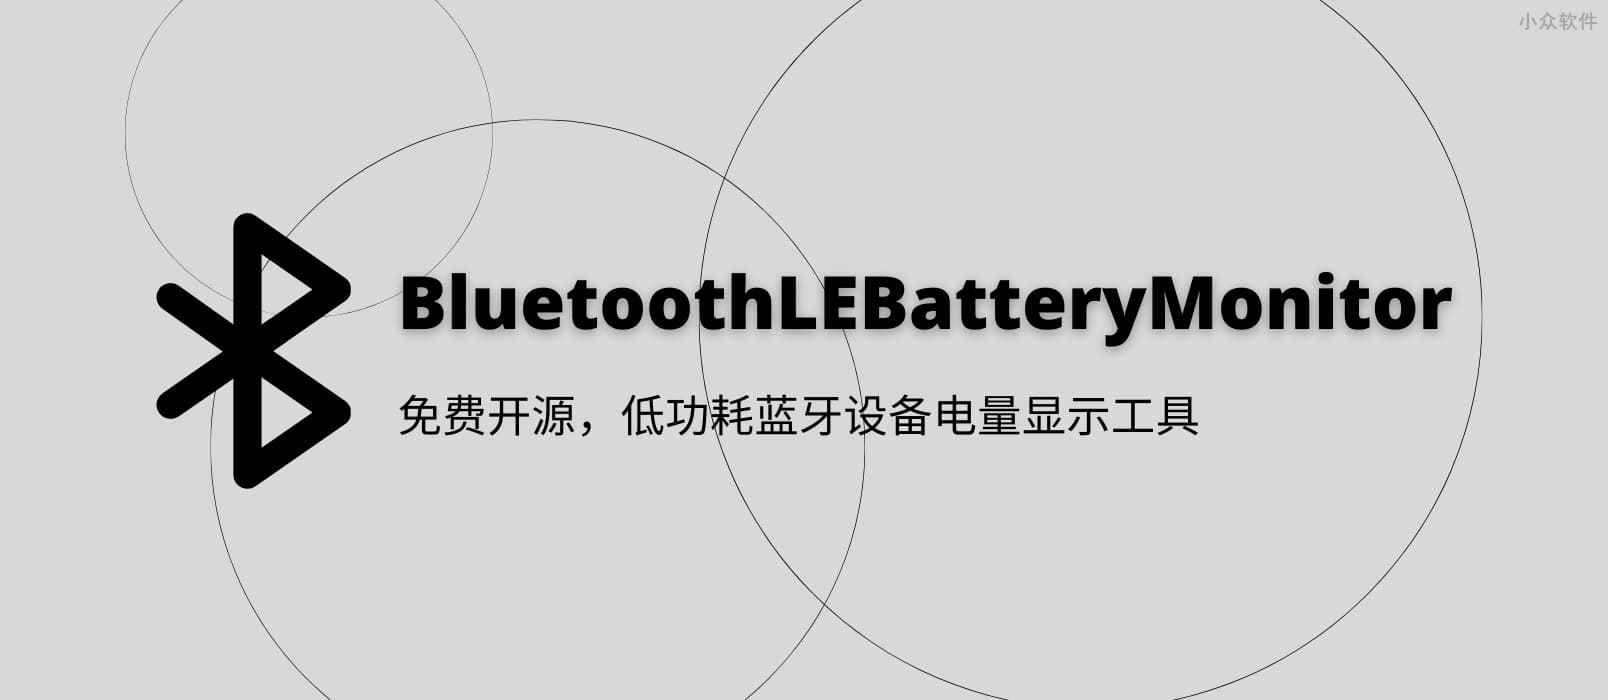 BluetoothLE Battery Monitor – 免费开源，低功耗蓝牙设备电量显示工具[Windows]